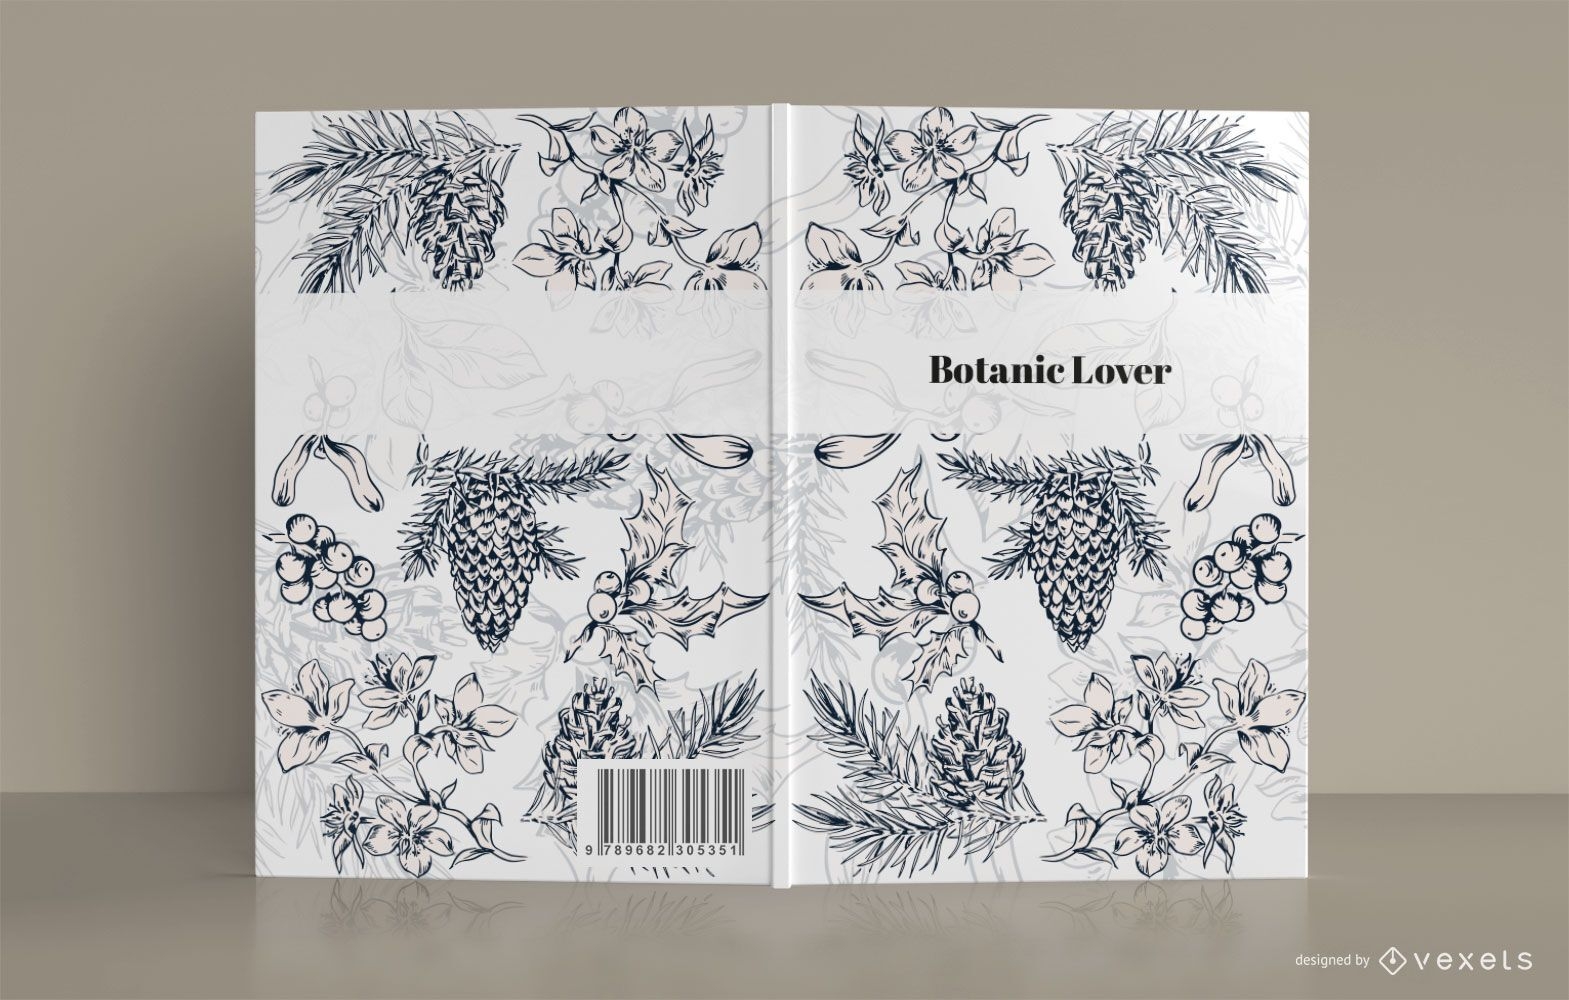 Botanic lover book cover design